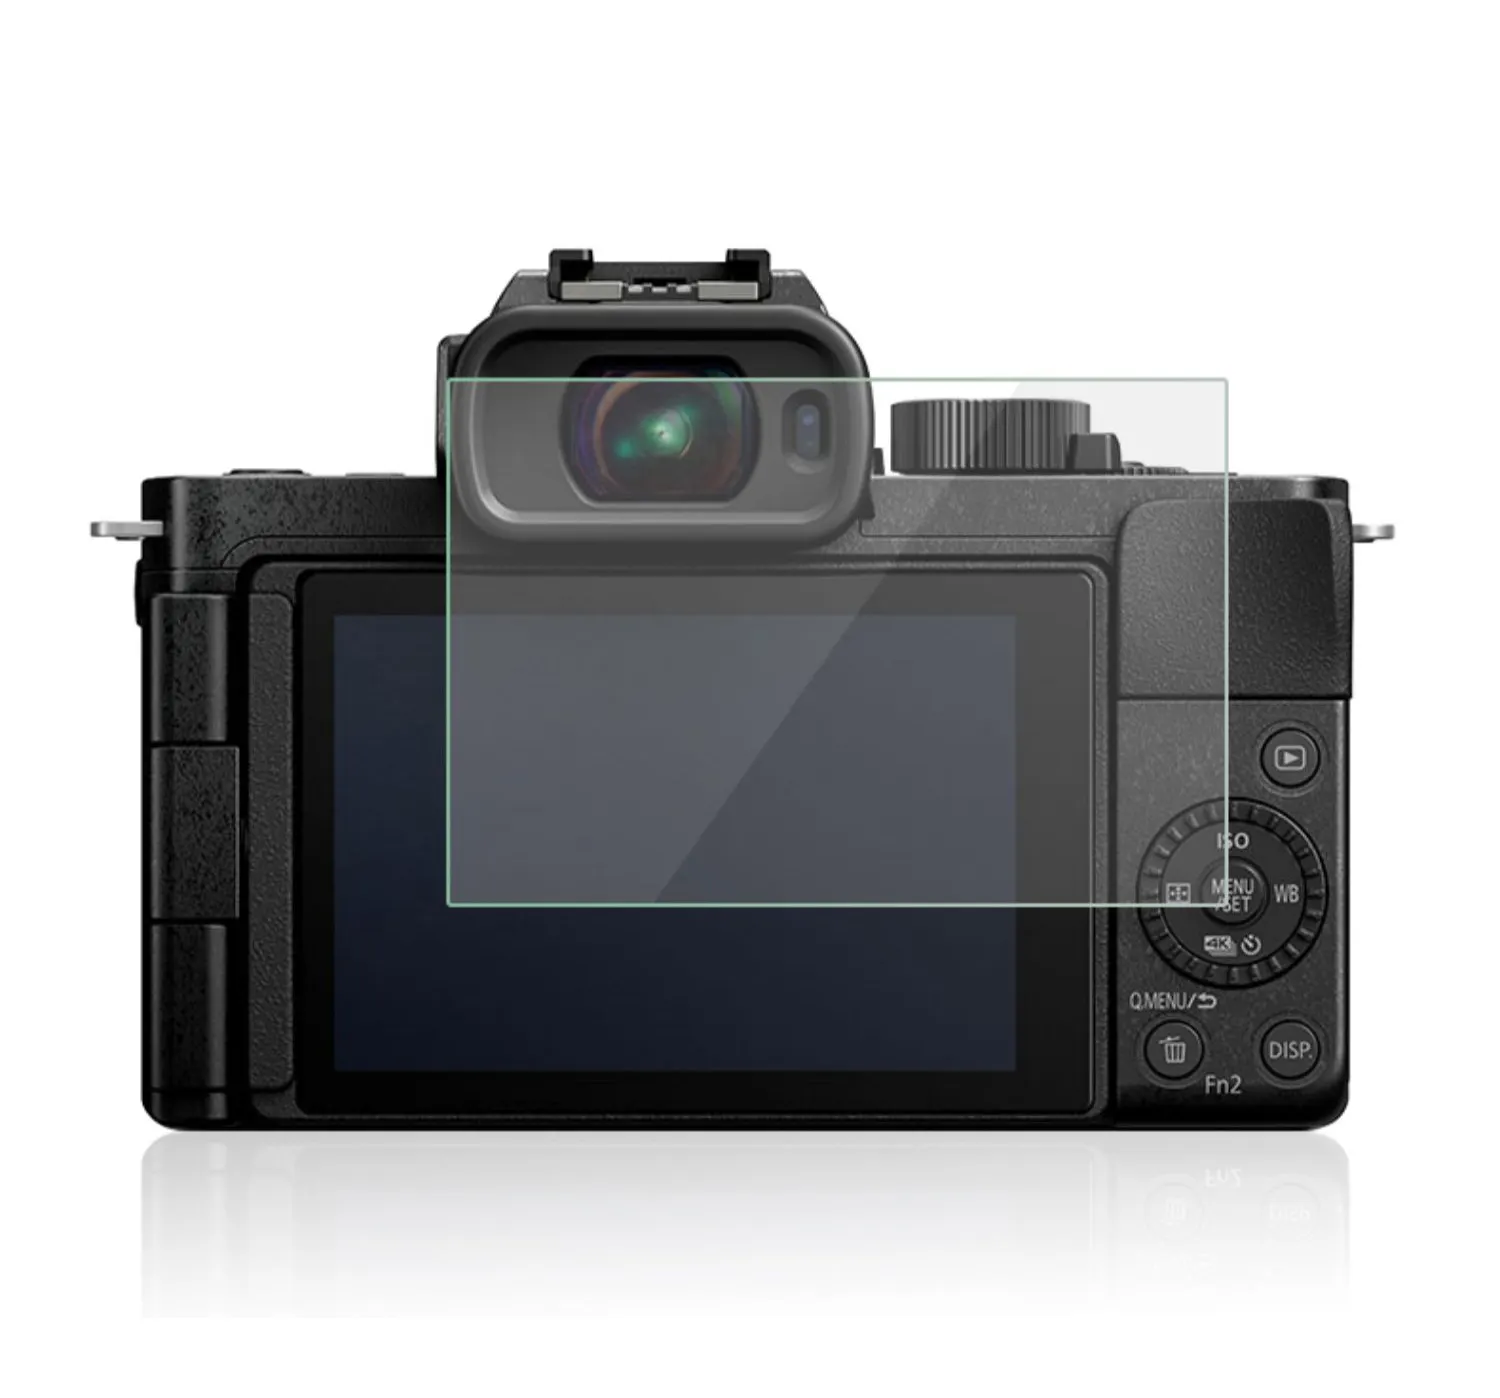 Protector de pantalla de vidrio templado para cámara Digital Panasonic Lumix G100 DSLR, 9H, 2,5d, 0,3mm, supertransparente, accesorios